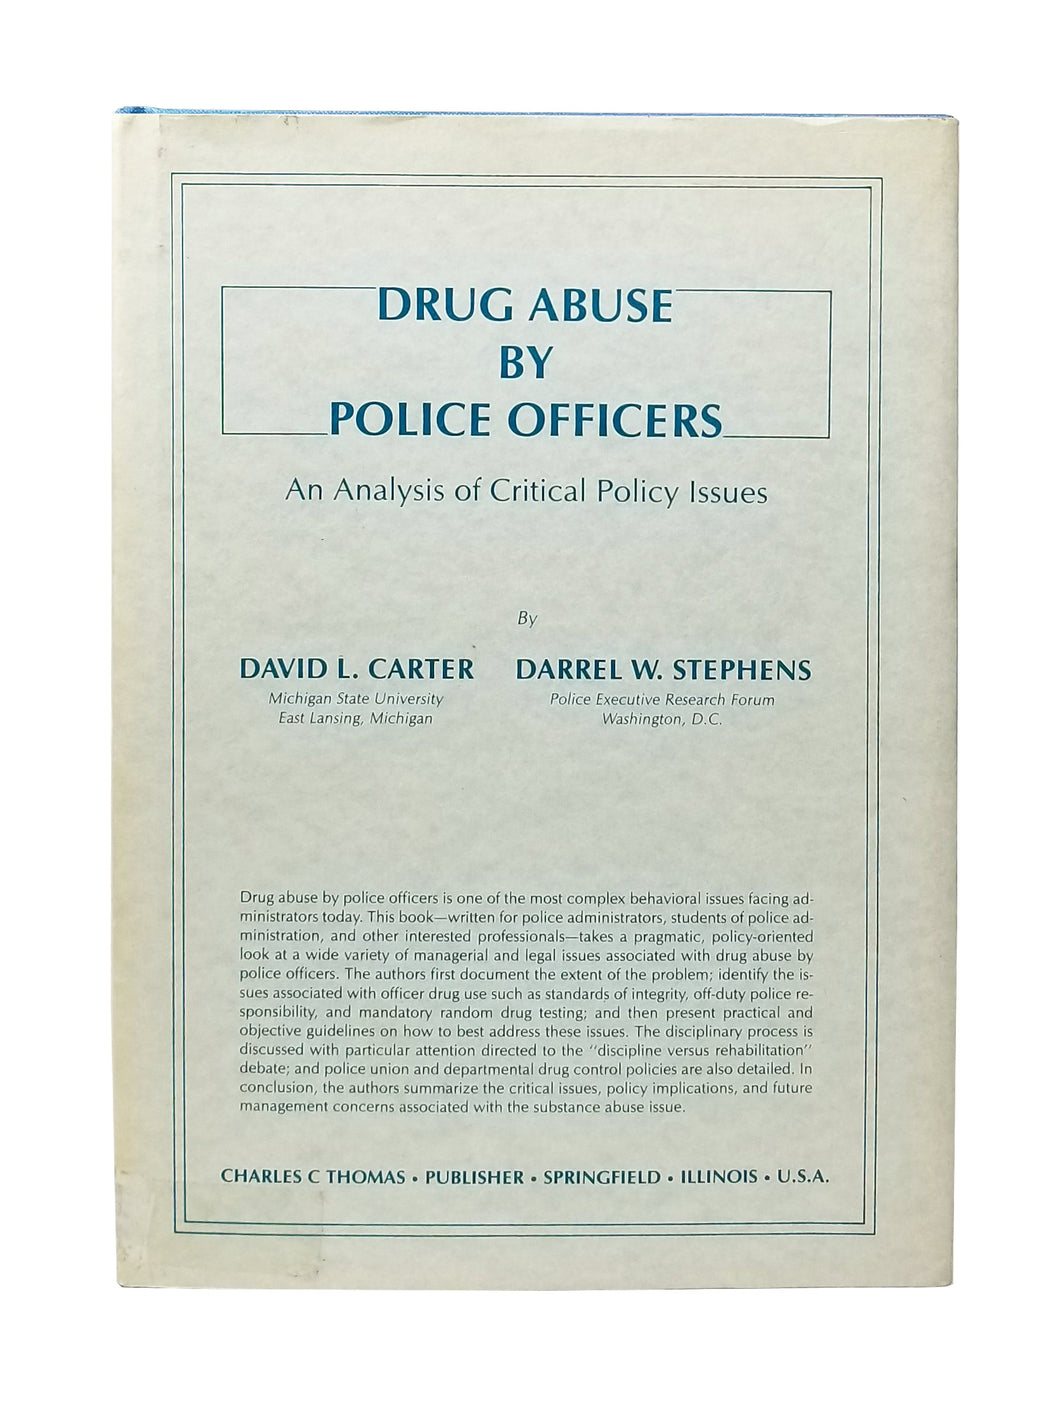 CARTER, David L. and Darrel W. Stephens